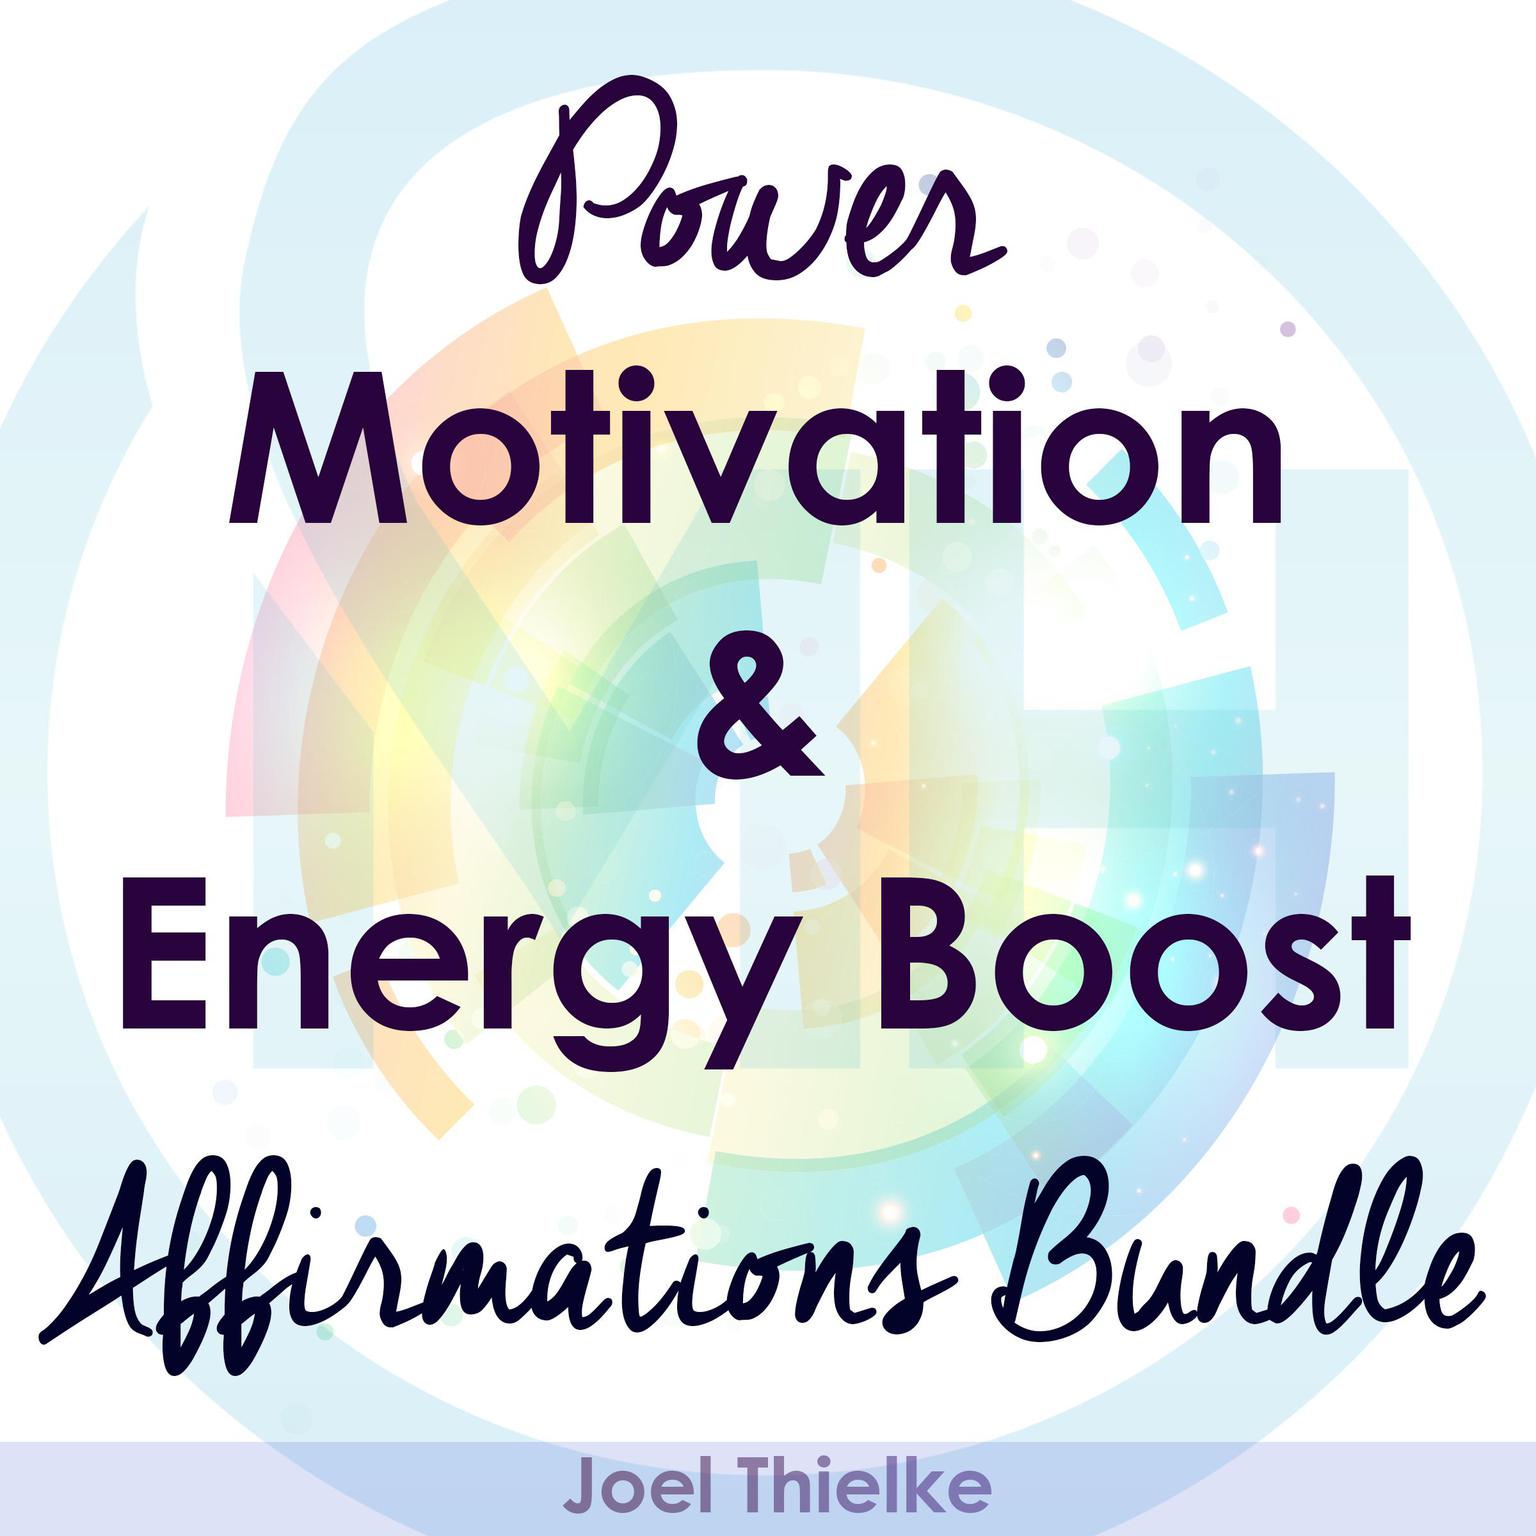 Power Motivation & Energy Boost - Affirmations Bundle Audiobook, by Joel Thielke